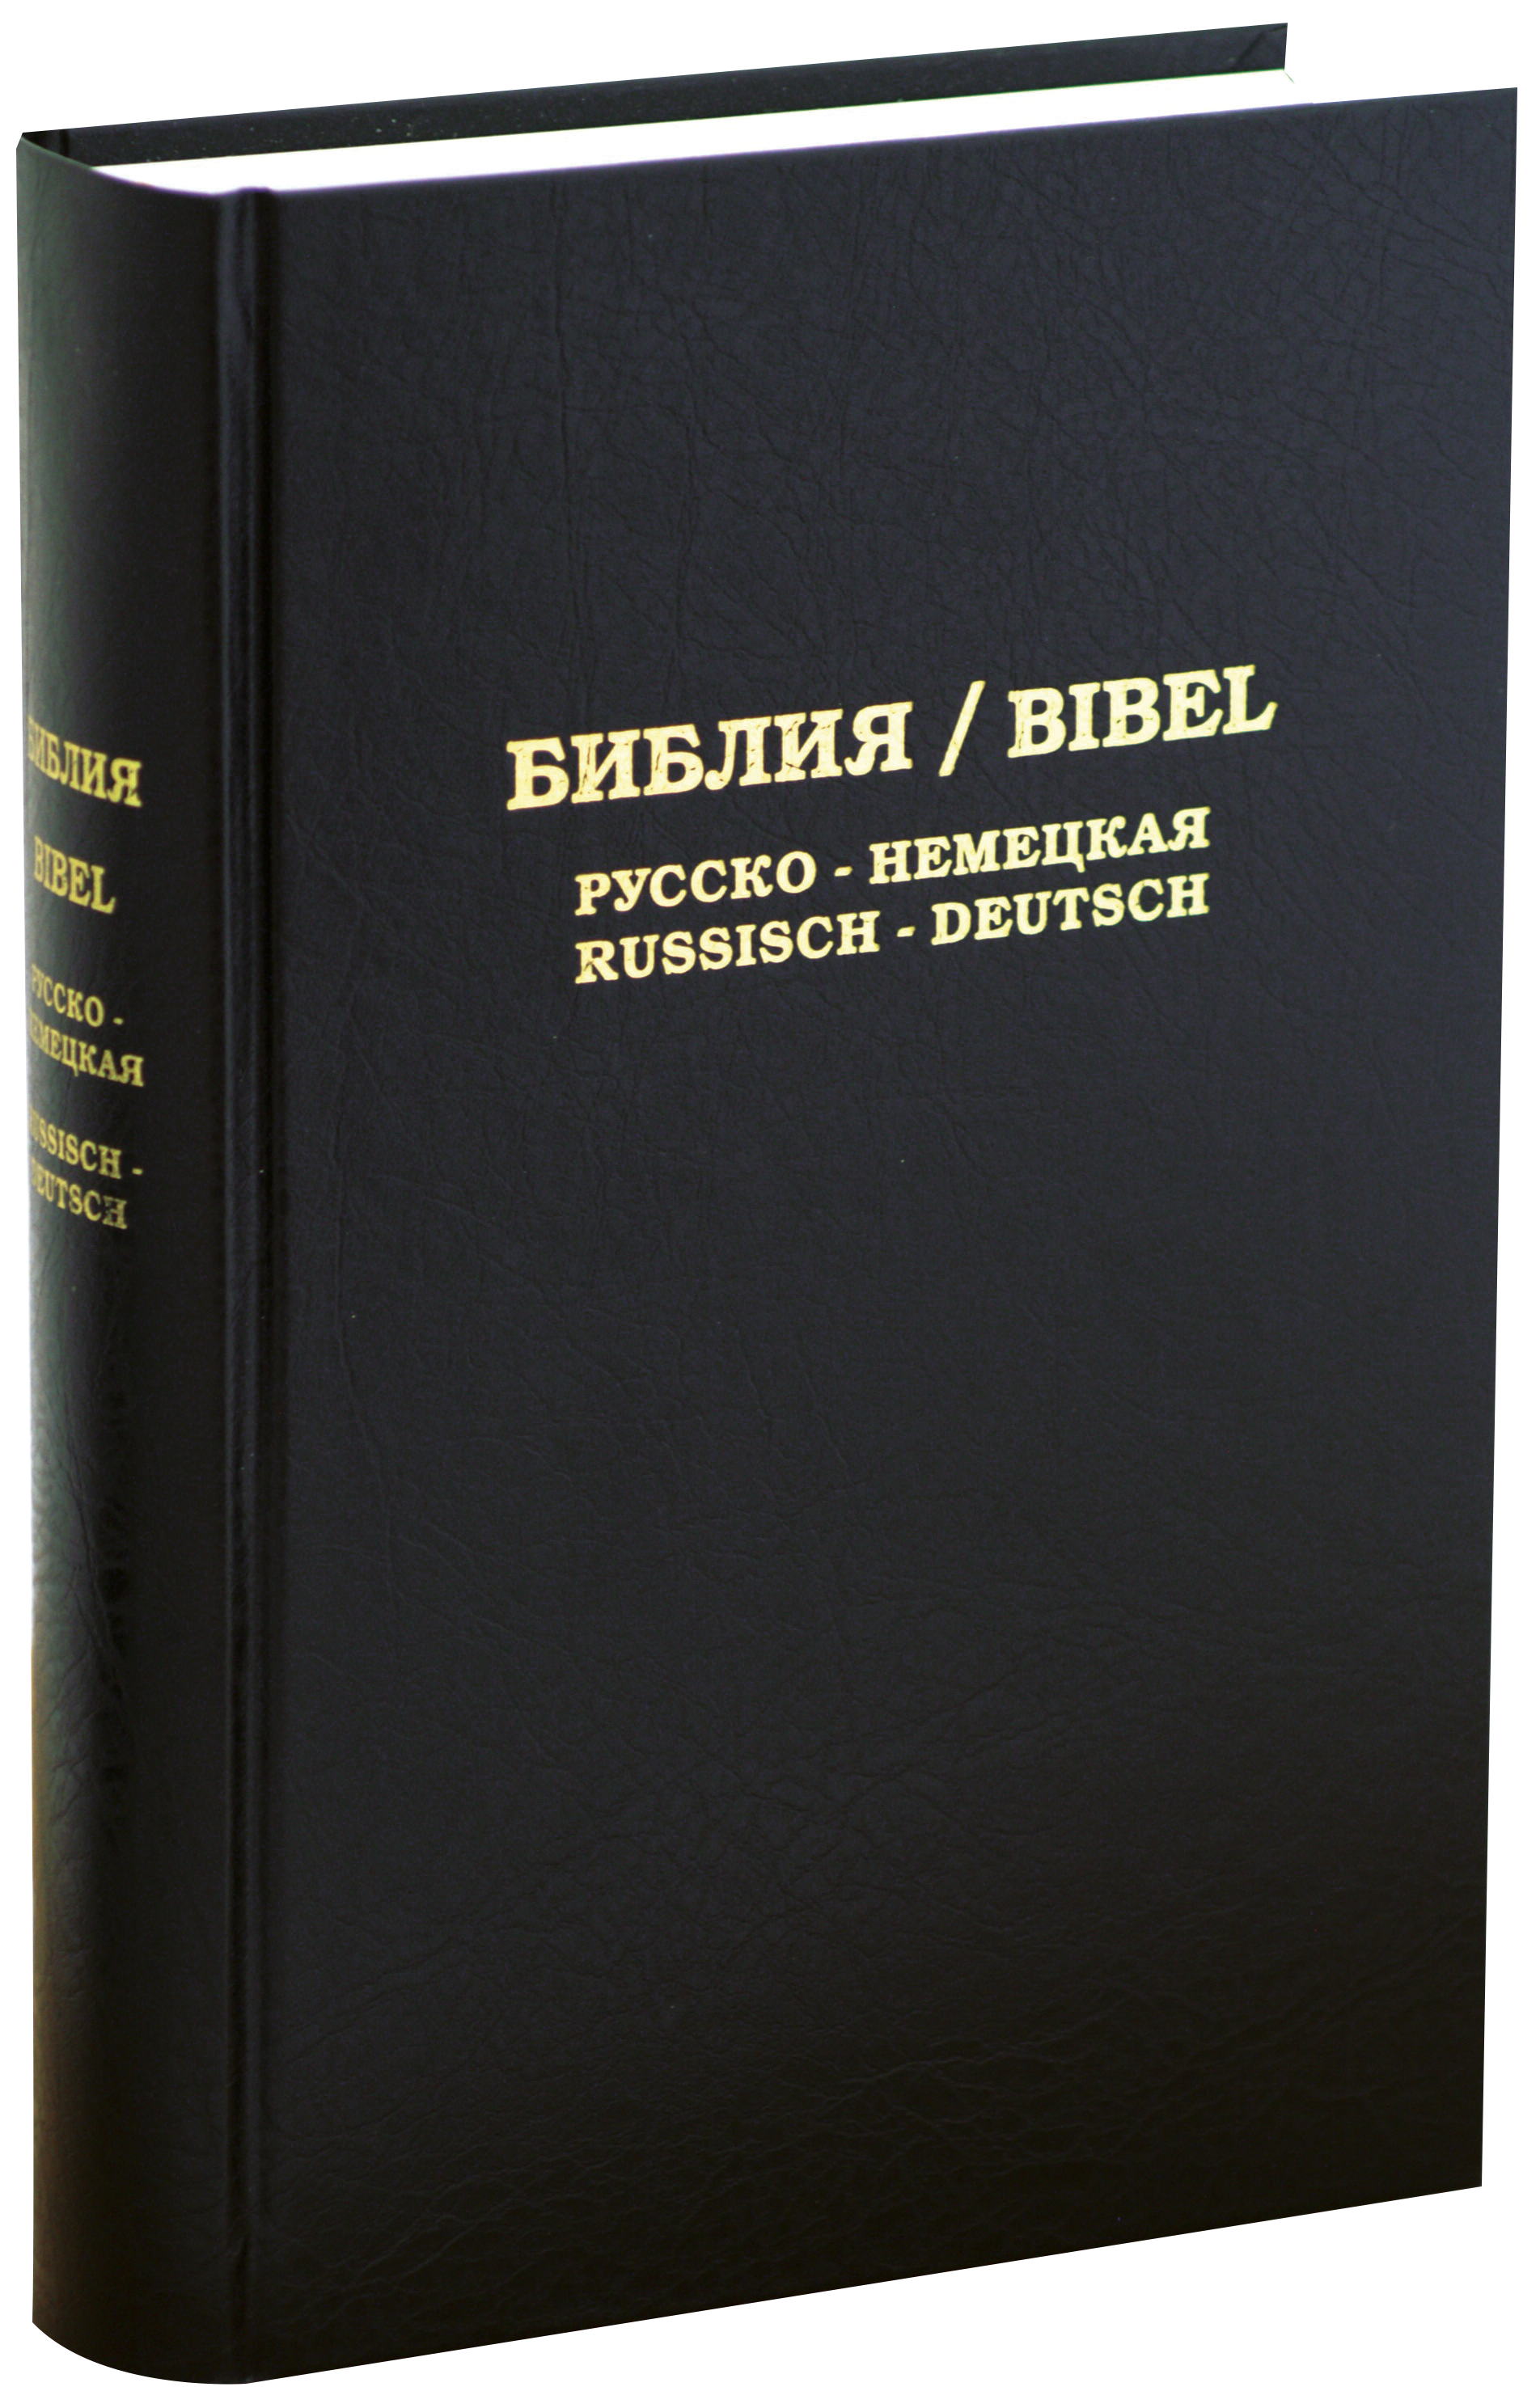 Die Bibel - Russisch-Deutsch, Hardcover